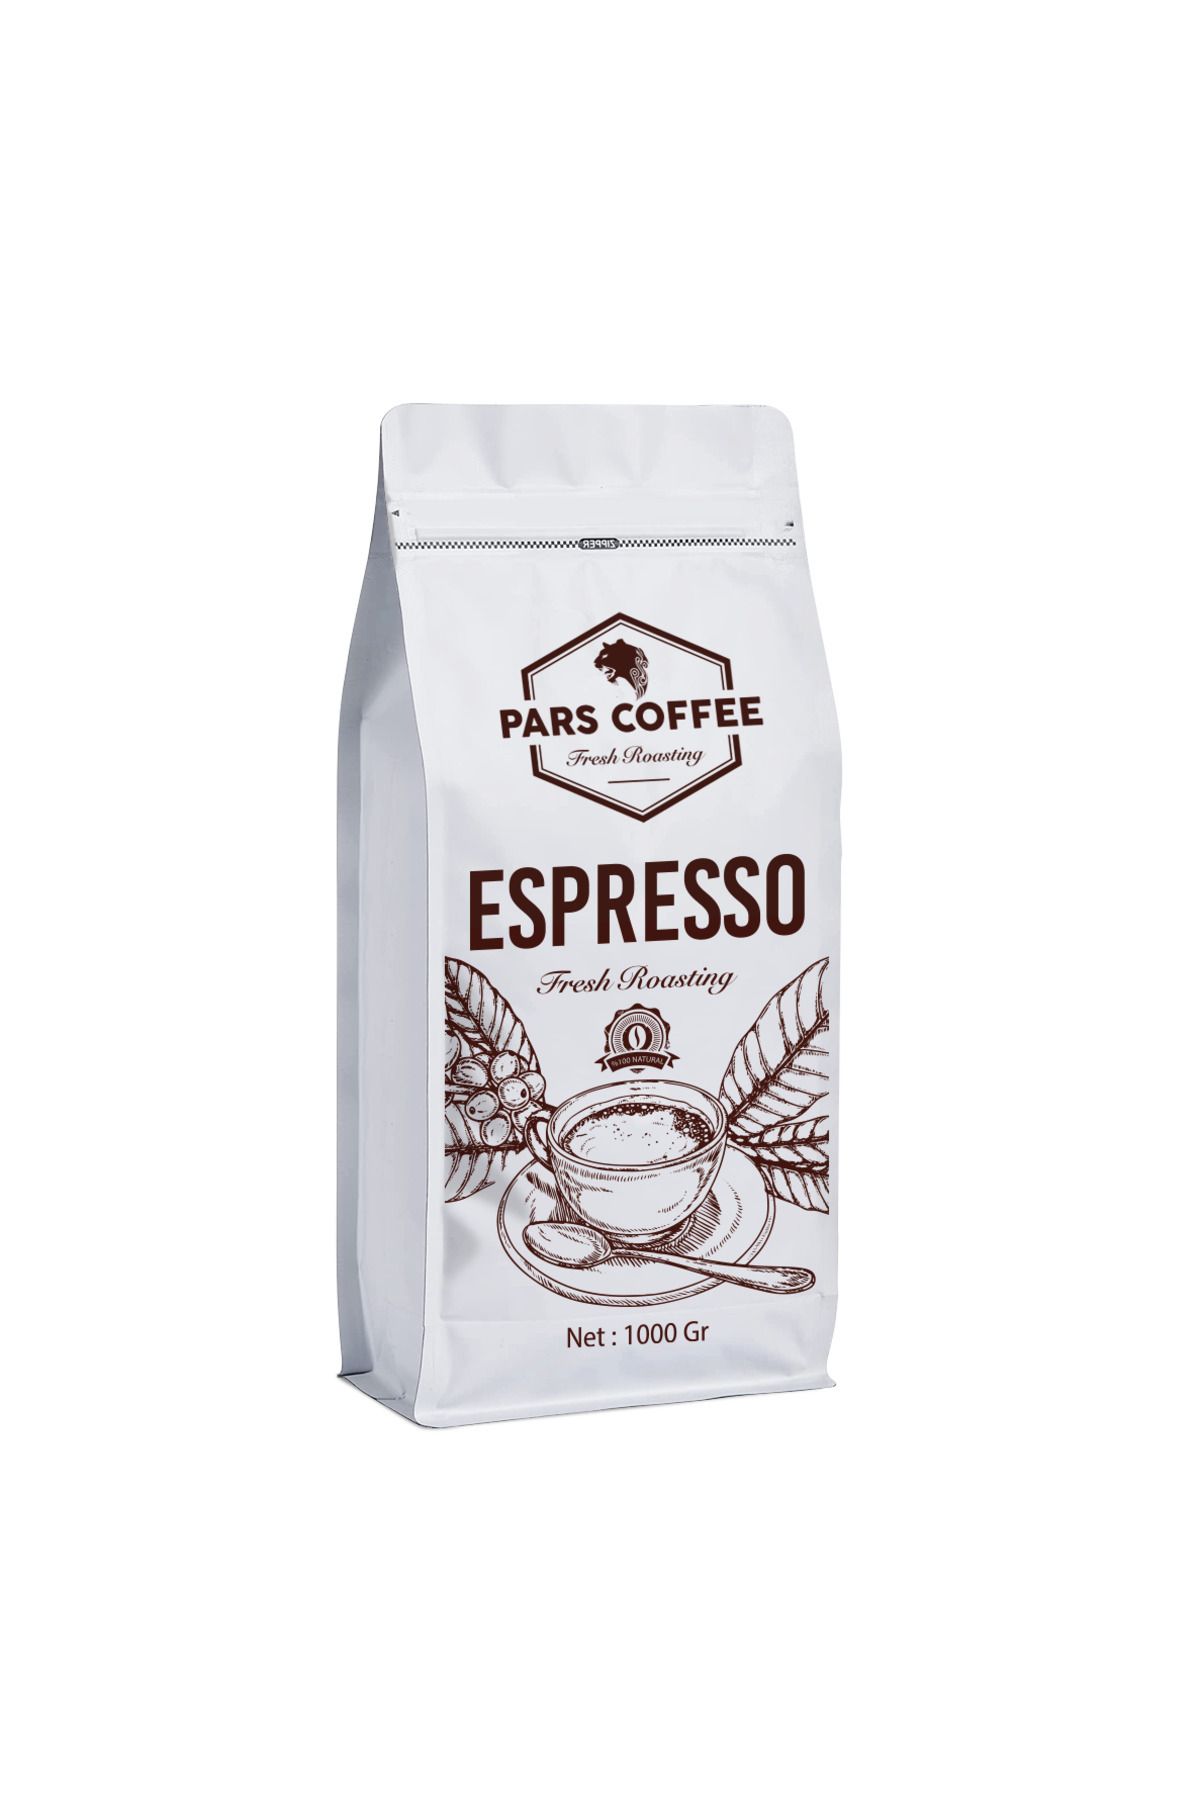 PARS COFFEE Esprresso Wild - 1 Kg - Profesional Çekirdek Kahve - Orta-koyu Kavrulmuş